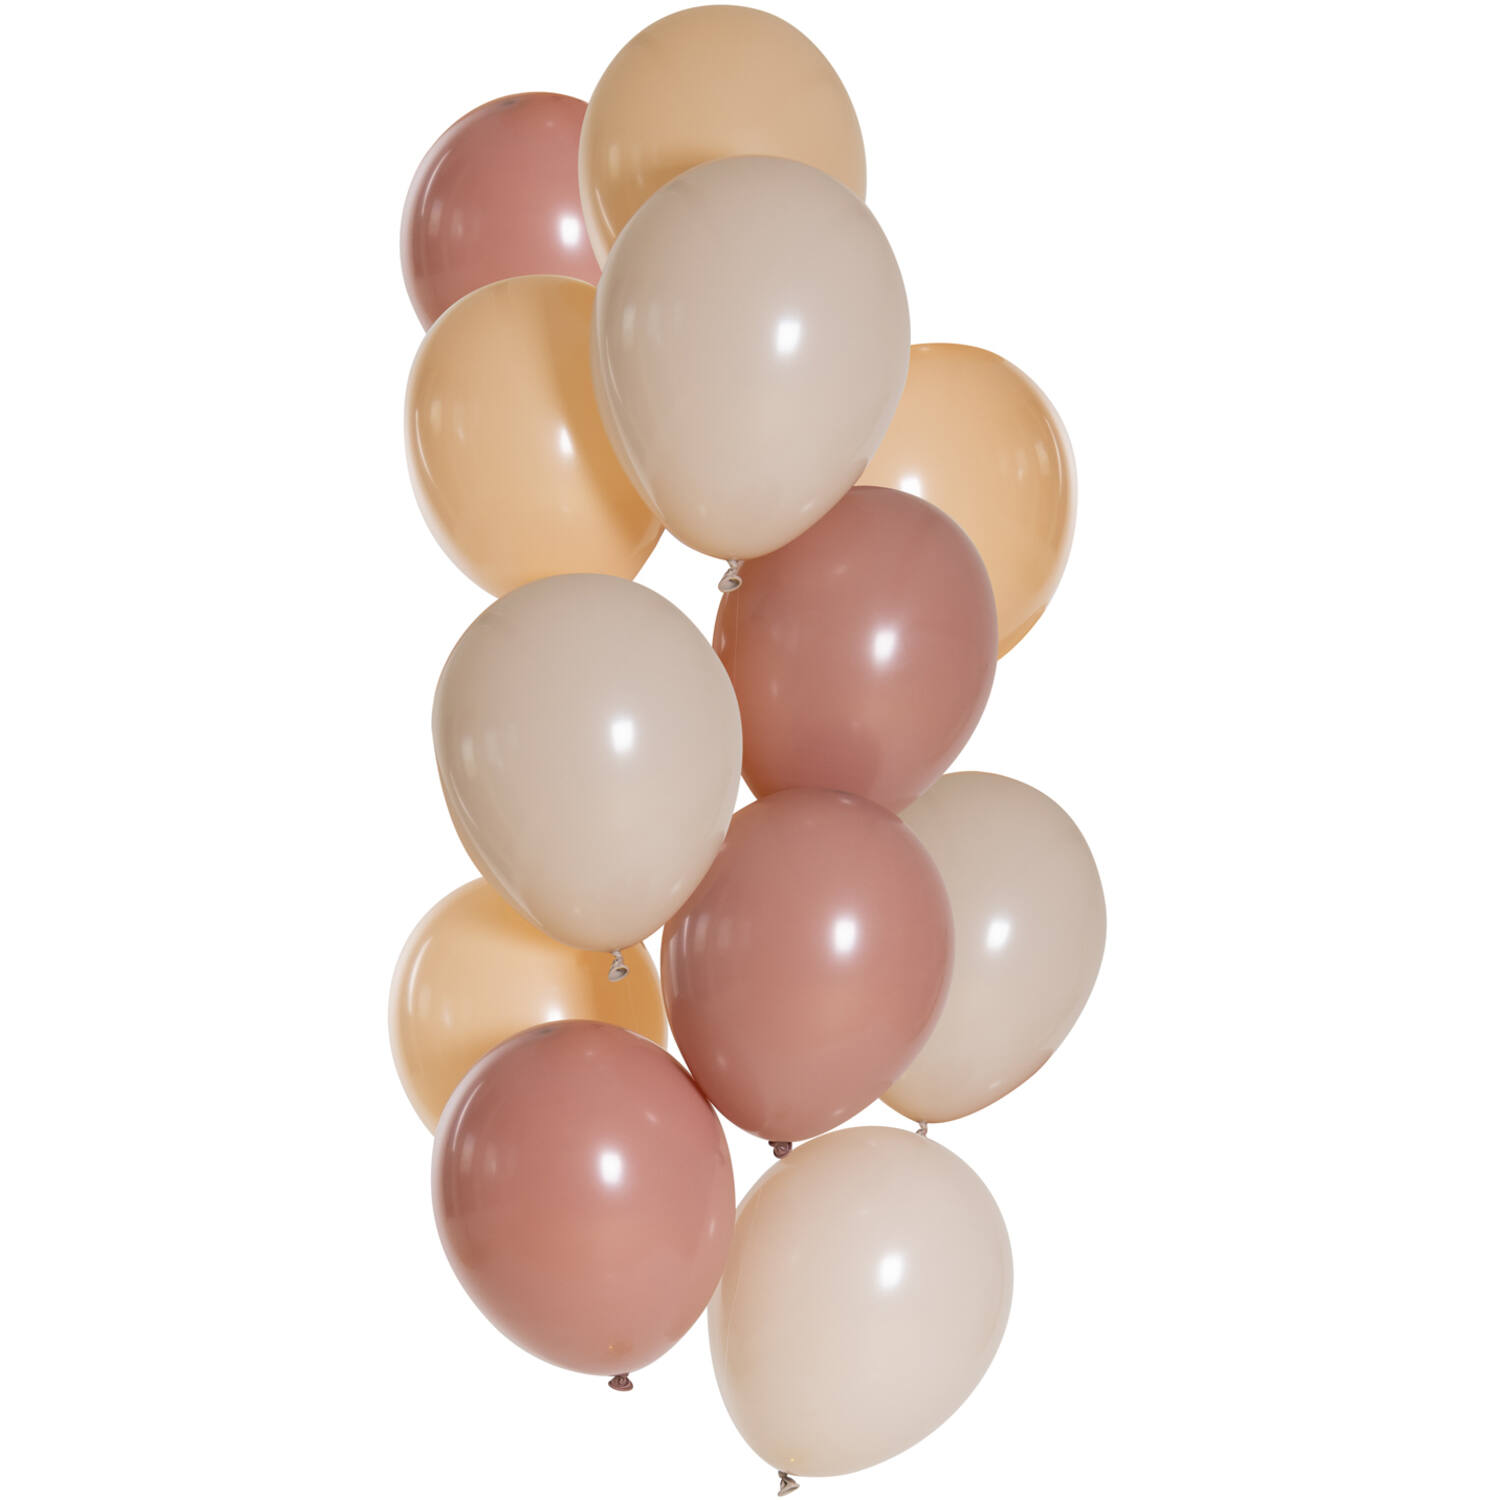 NEU Premium-Latex-Luftballons Blush Crush, 33cm, 12 Stk.